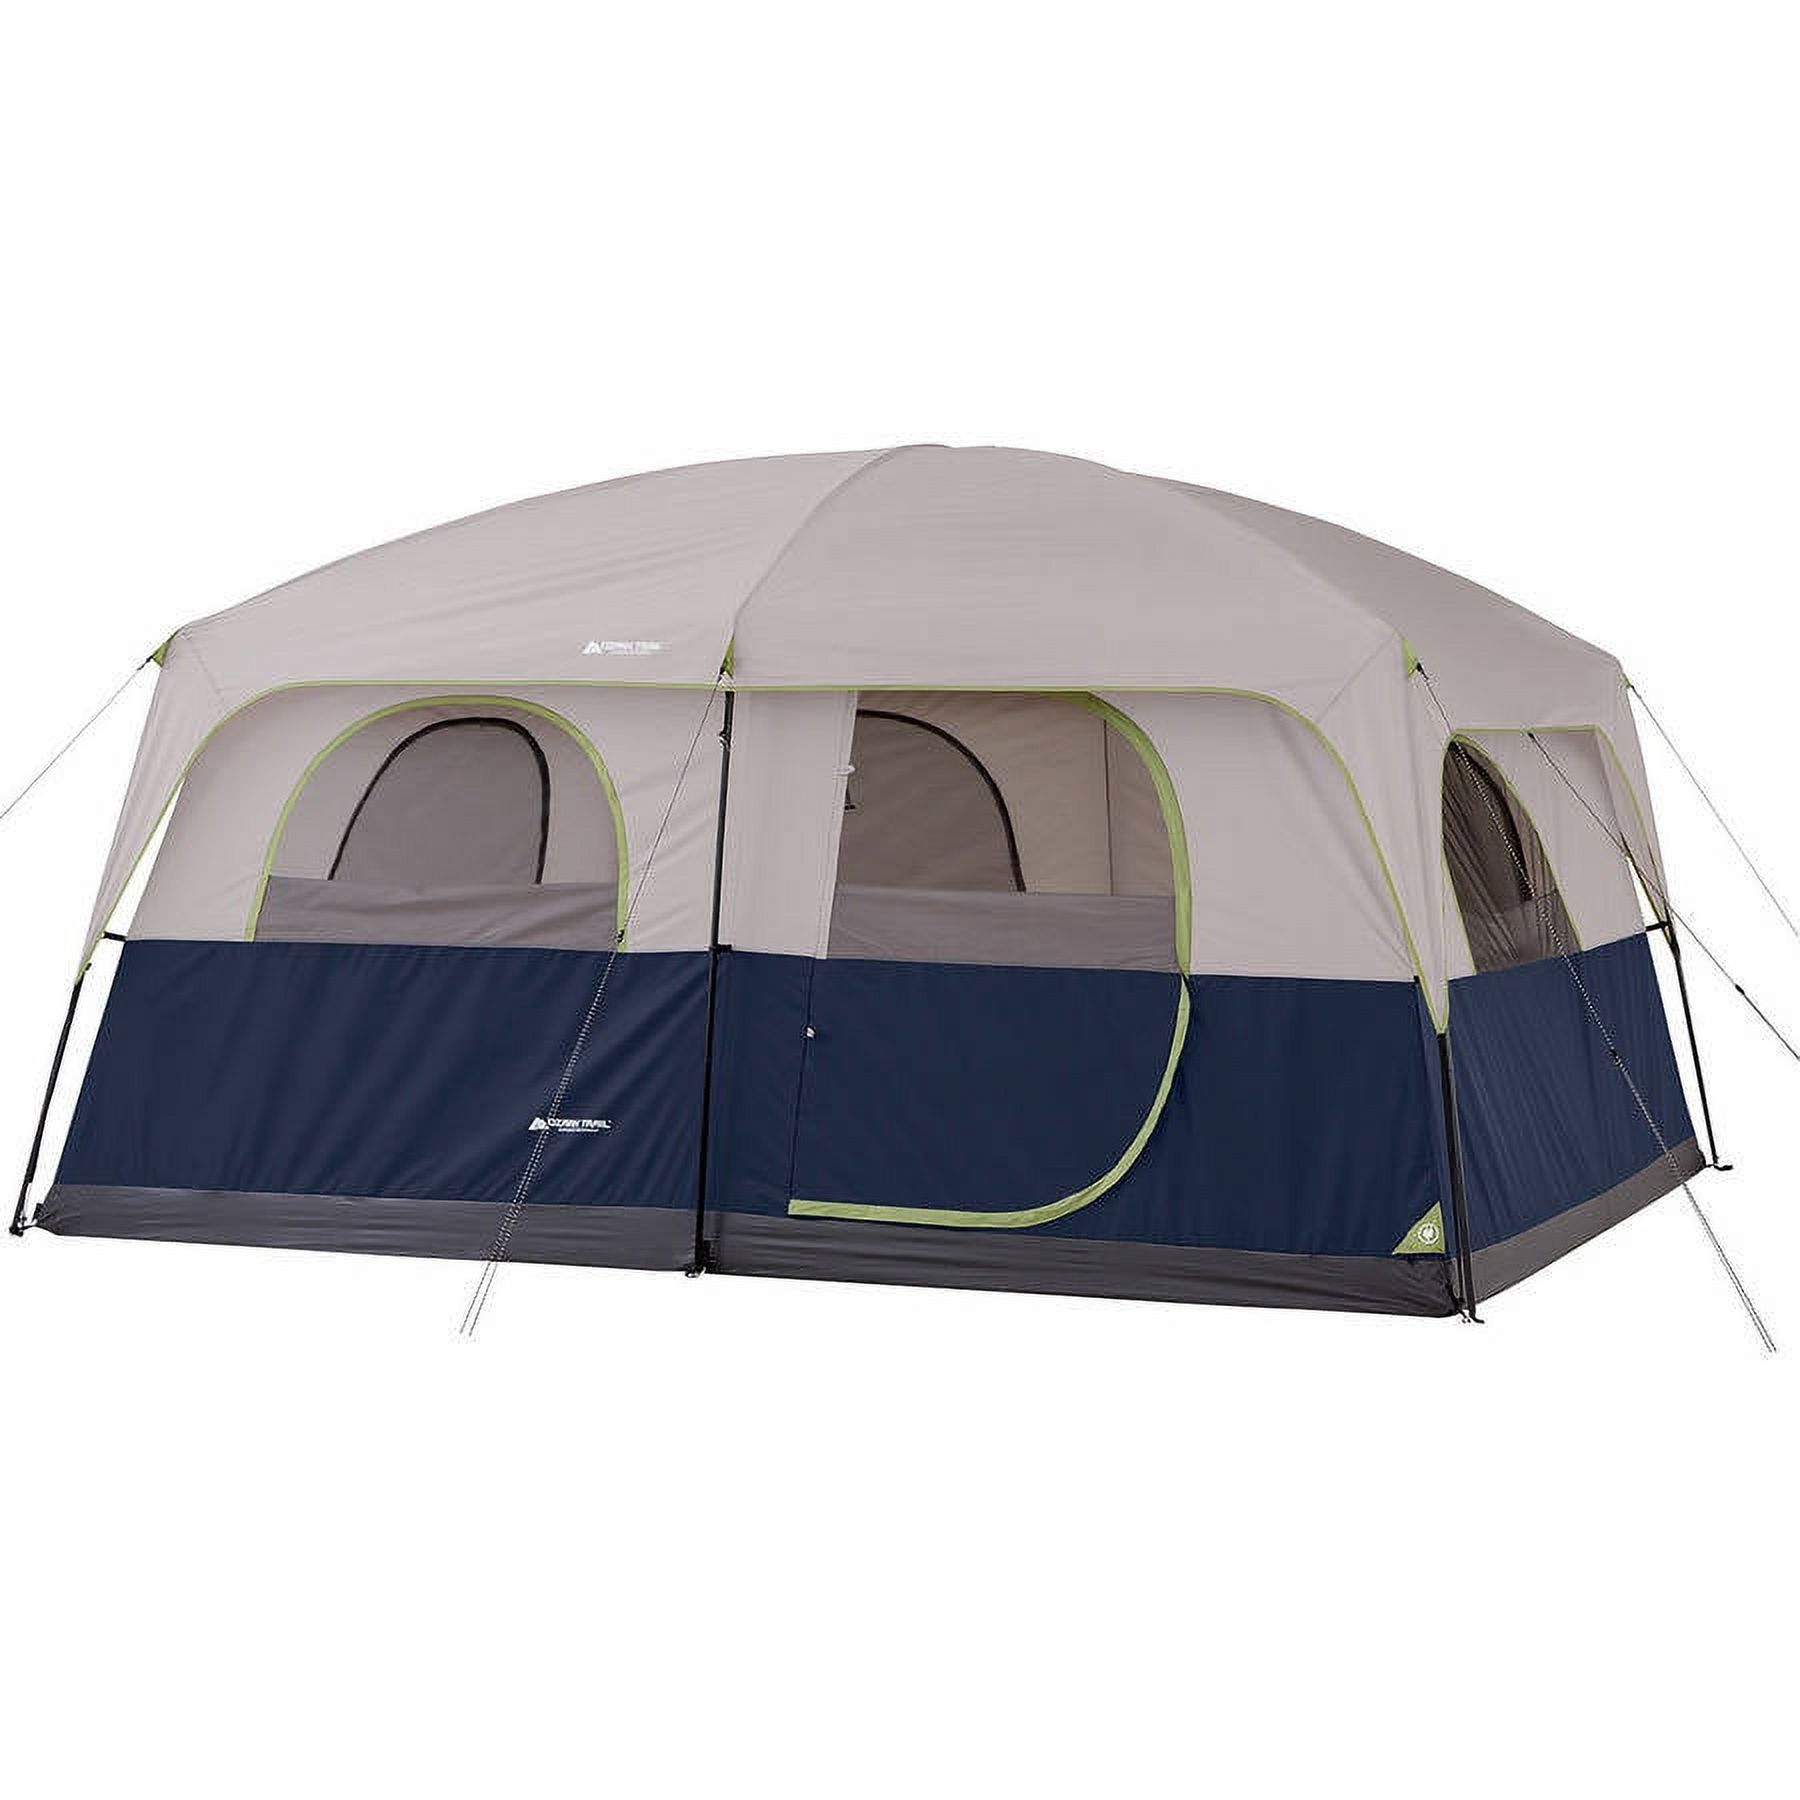 Ozark Trail 14' x 10' Family Cabin Tent, Sleeps 10, 13.5 lbs - image 1 of 6